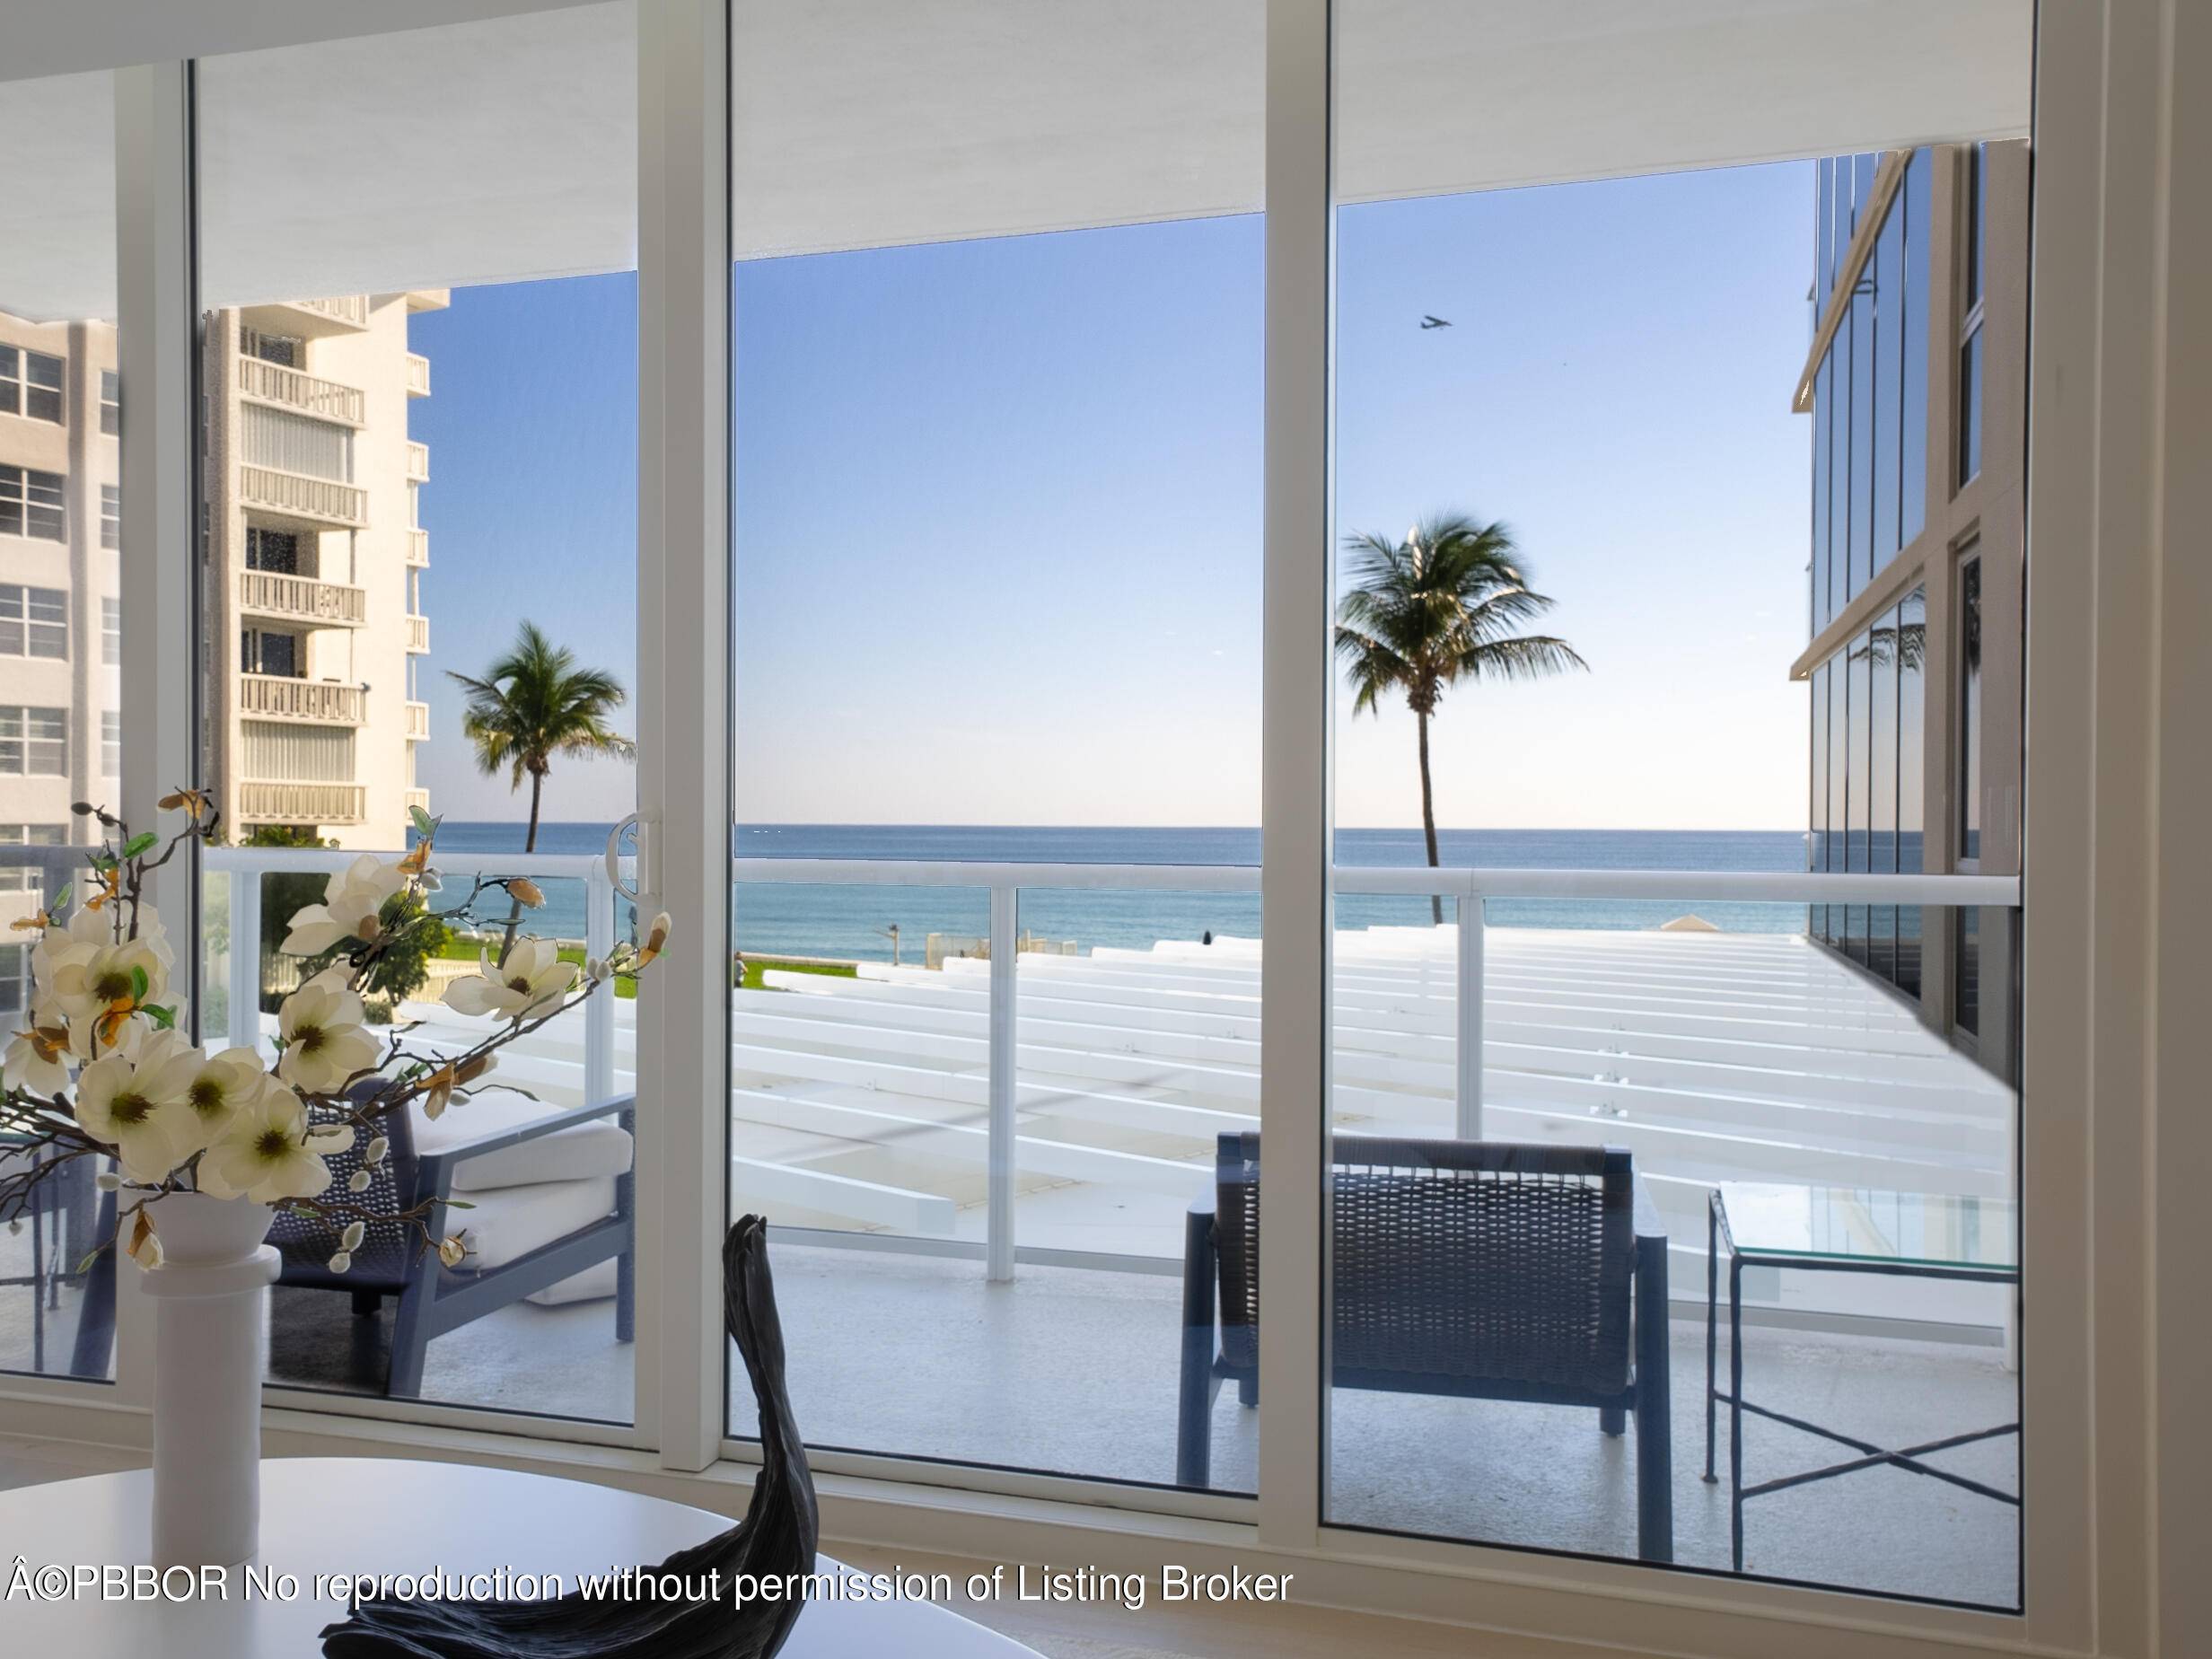 This fabulous beachfront condo features 3 bedrooms, 3.